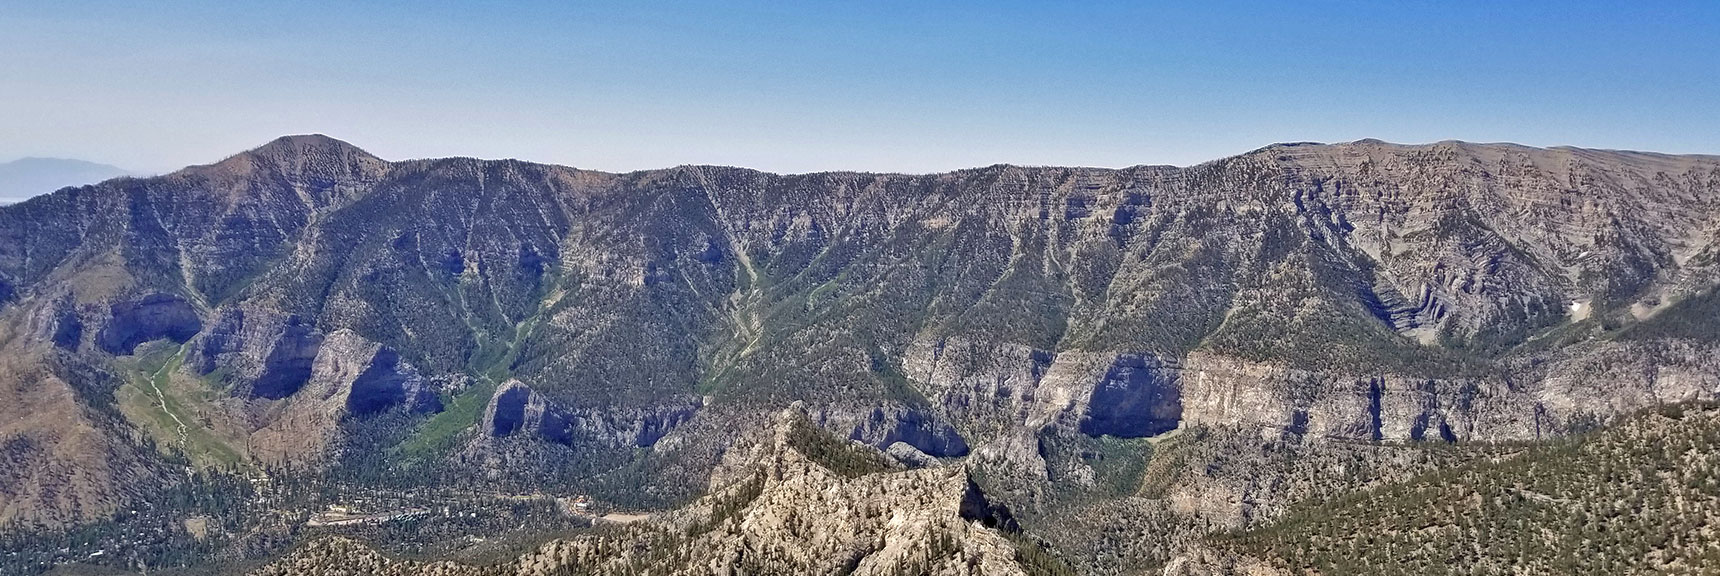 Griffith Peak and Kyle Canyon South Ridge Viewed from Mummy's Toe Summit | Mummy Mountain's Toe, Mt. Charleston Wilderness, Nevada